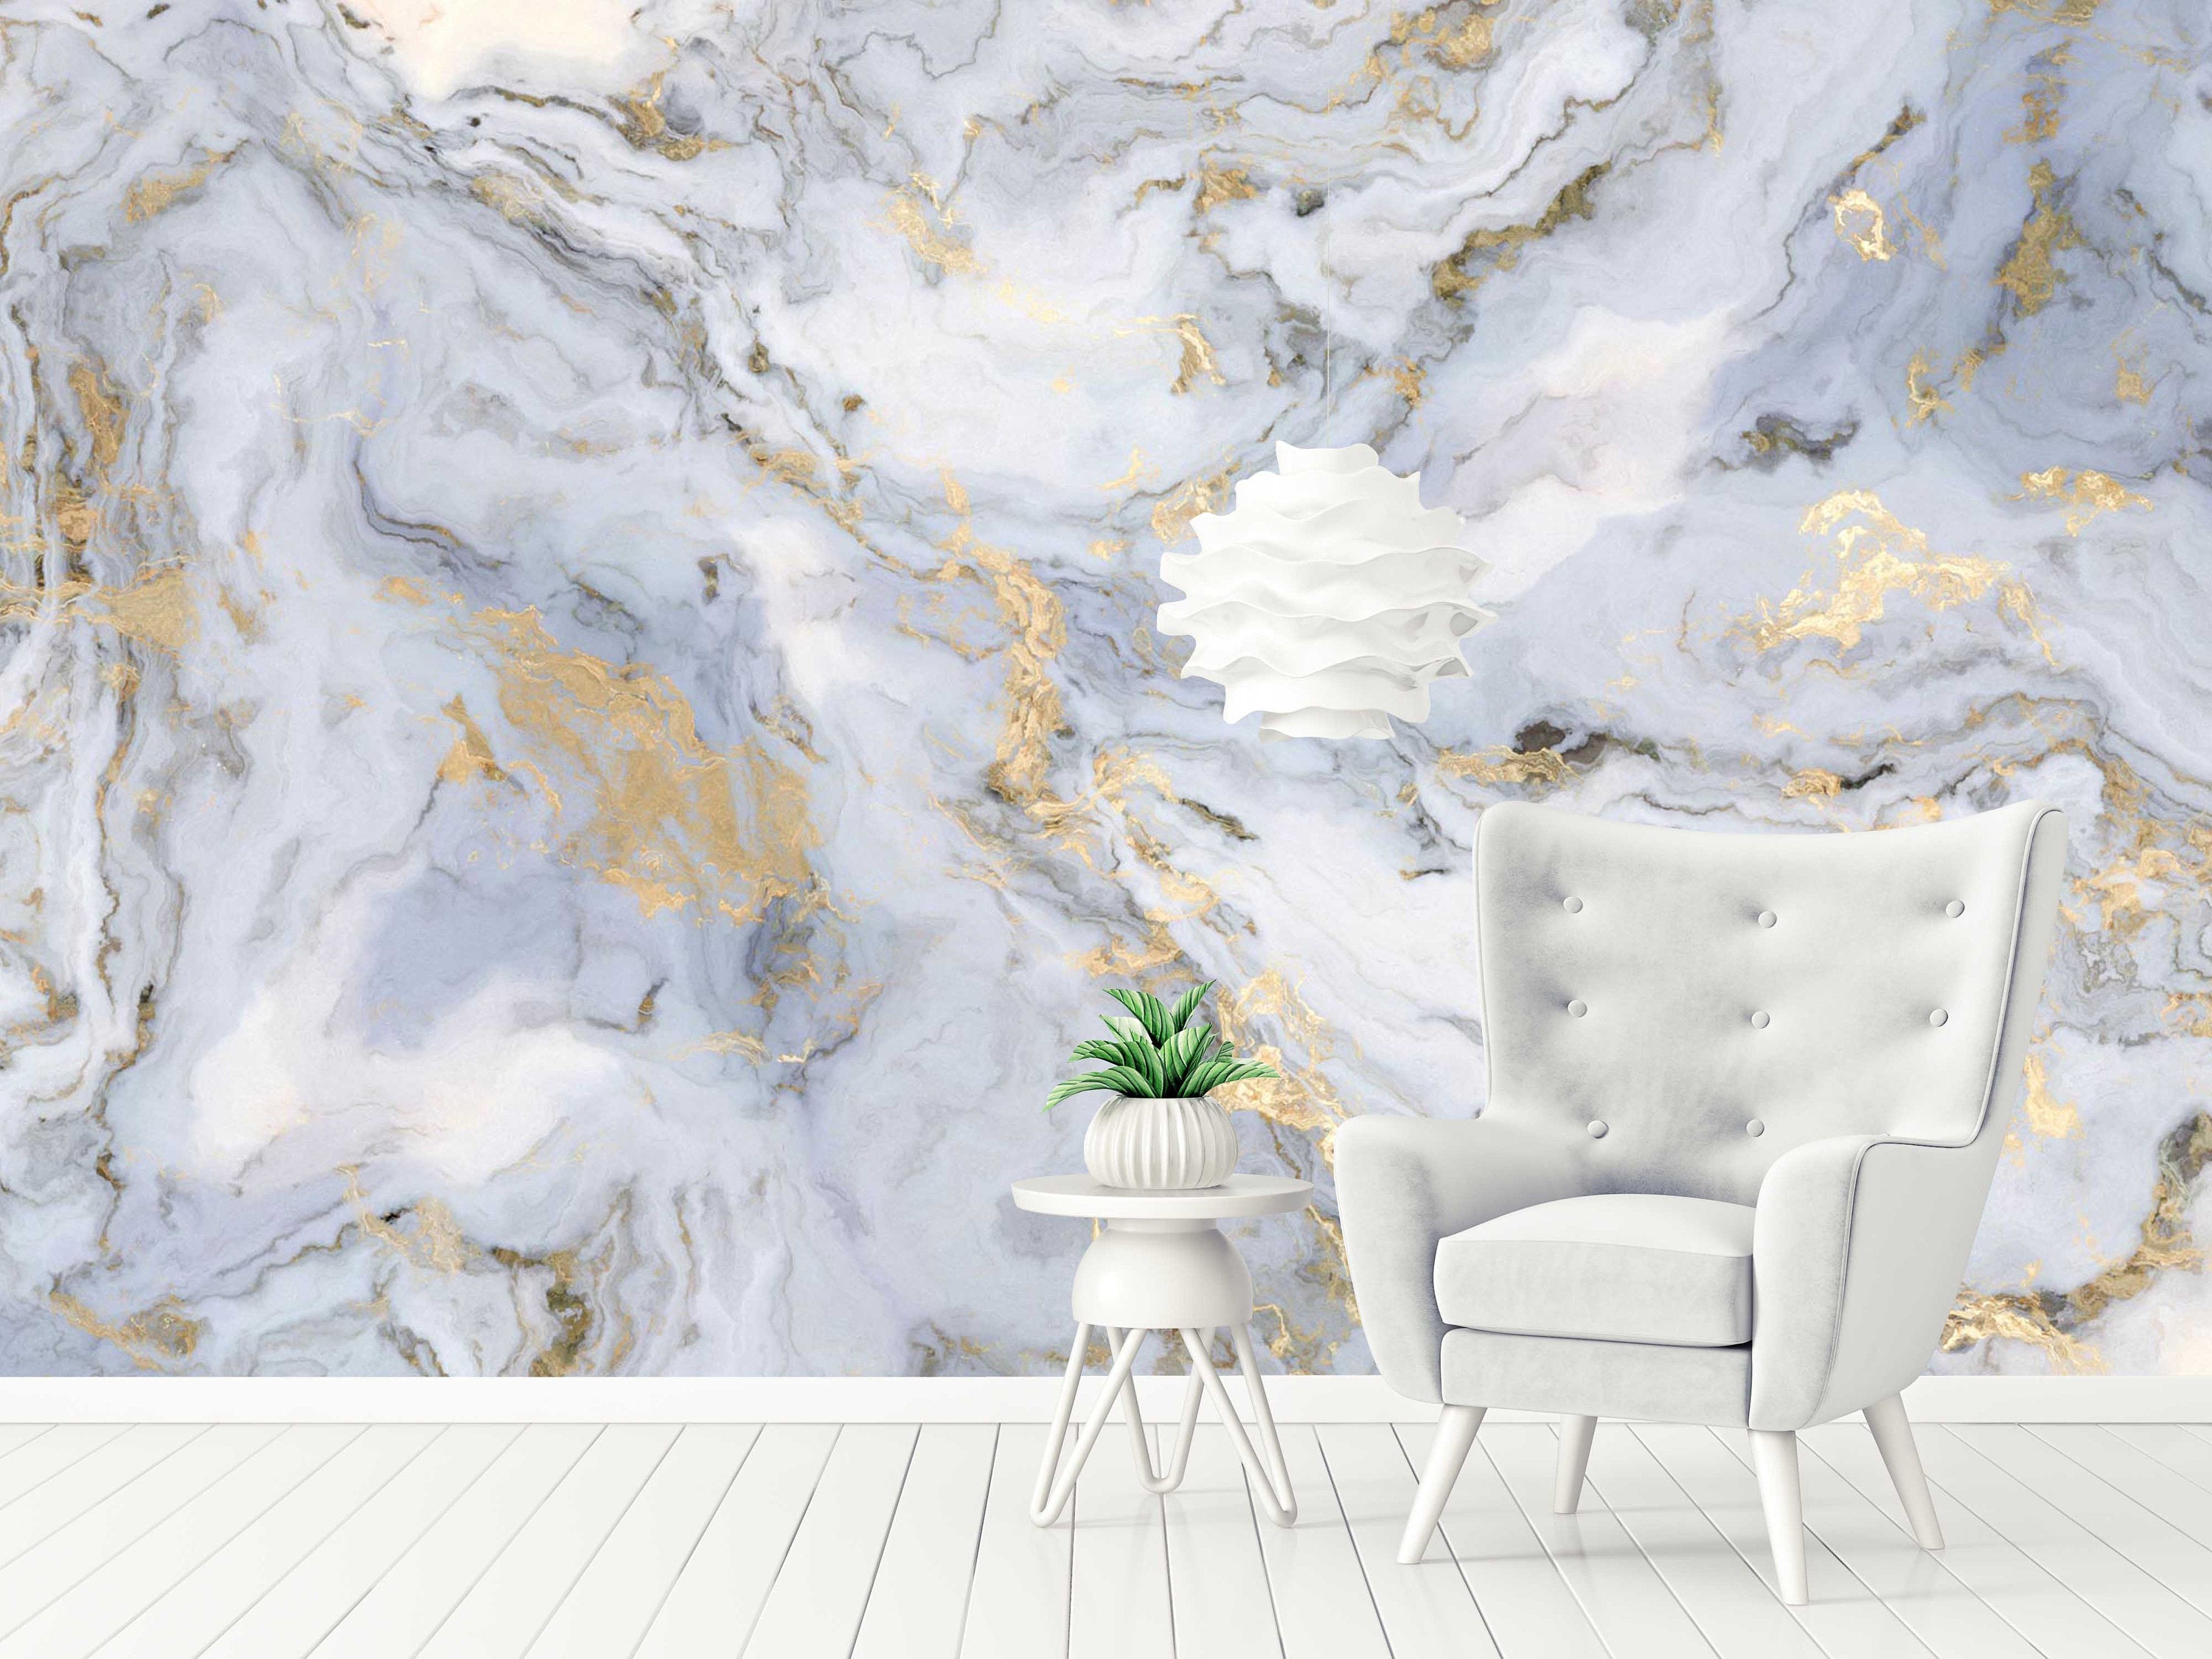 Marble Texture Abstract Design Wallpaper Home Decor Wall Art